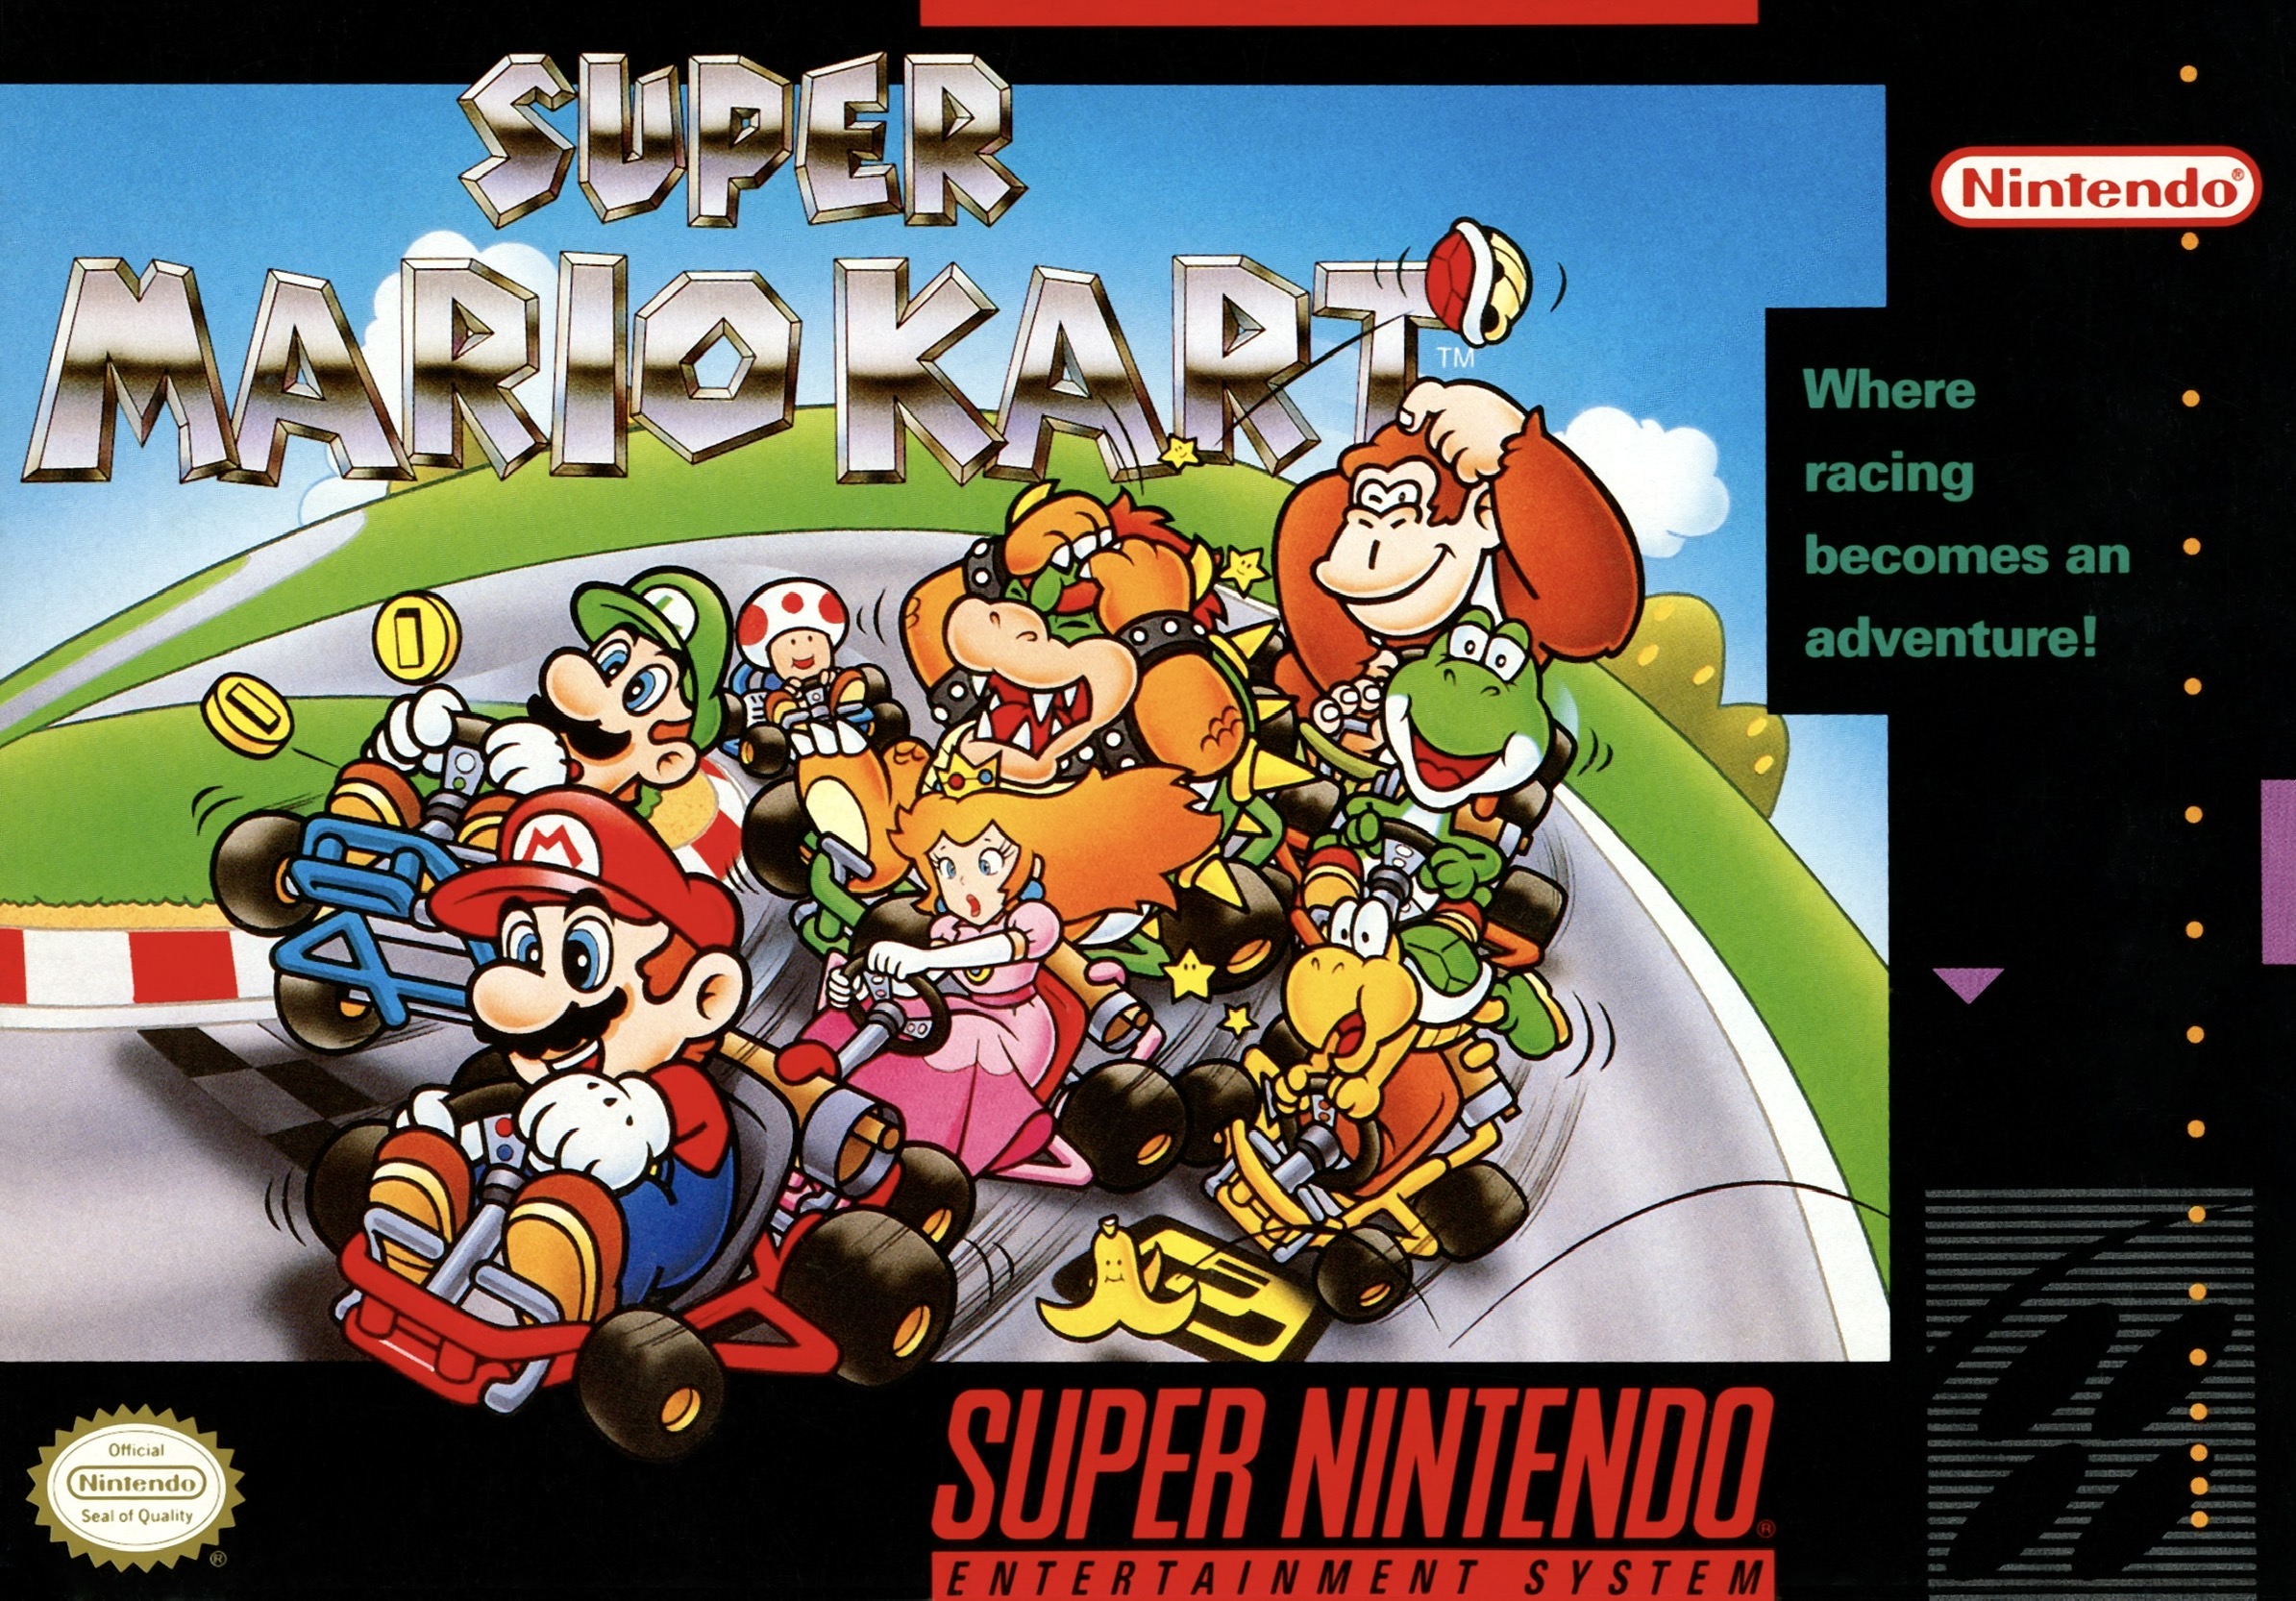 List of Super Nintendo Entertainment System games - Wikipedia